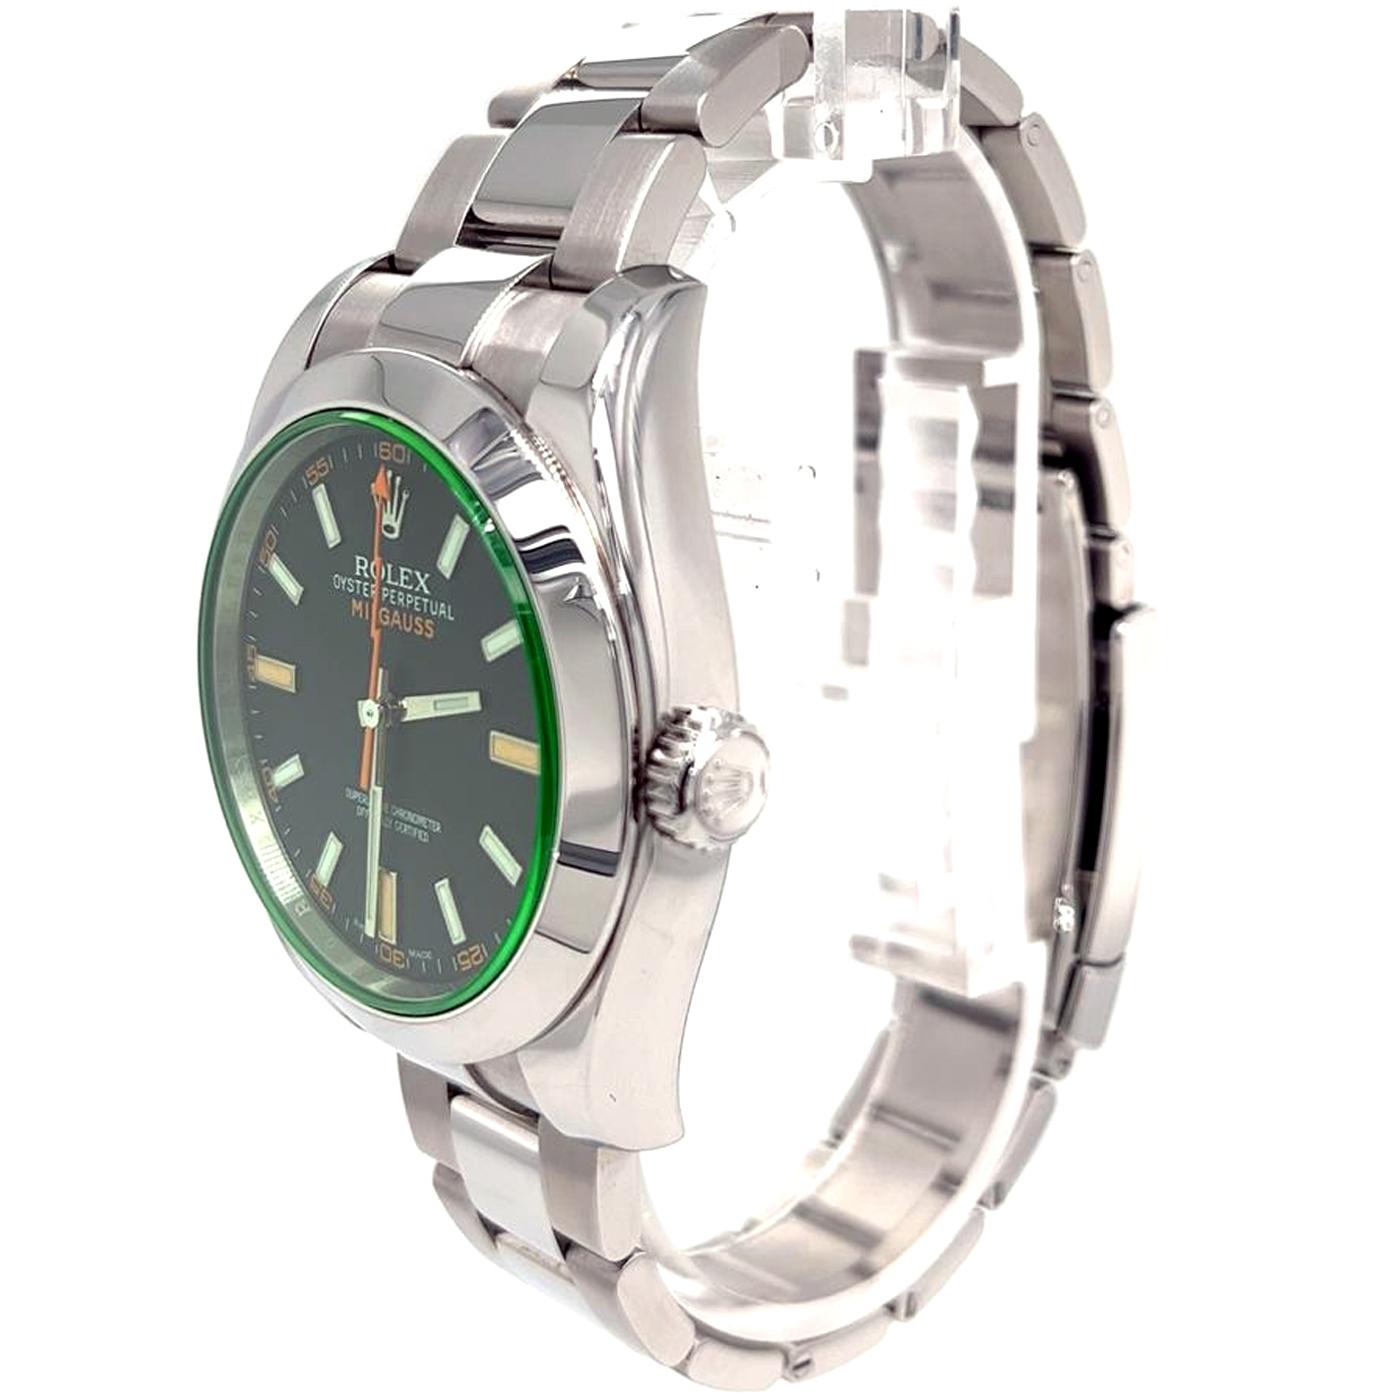 Modernist Rolex Milgauss Black Dial Green Crystal Stainless Steel Watch 116400GV